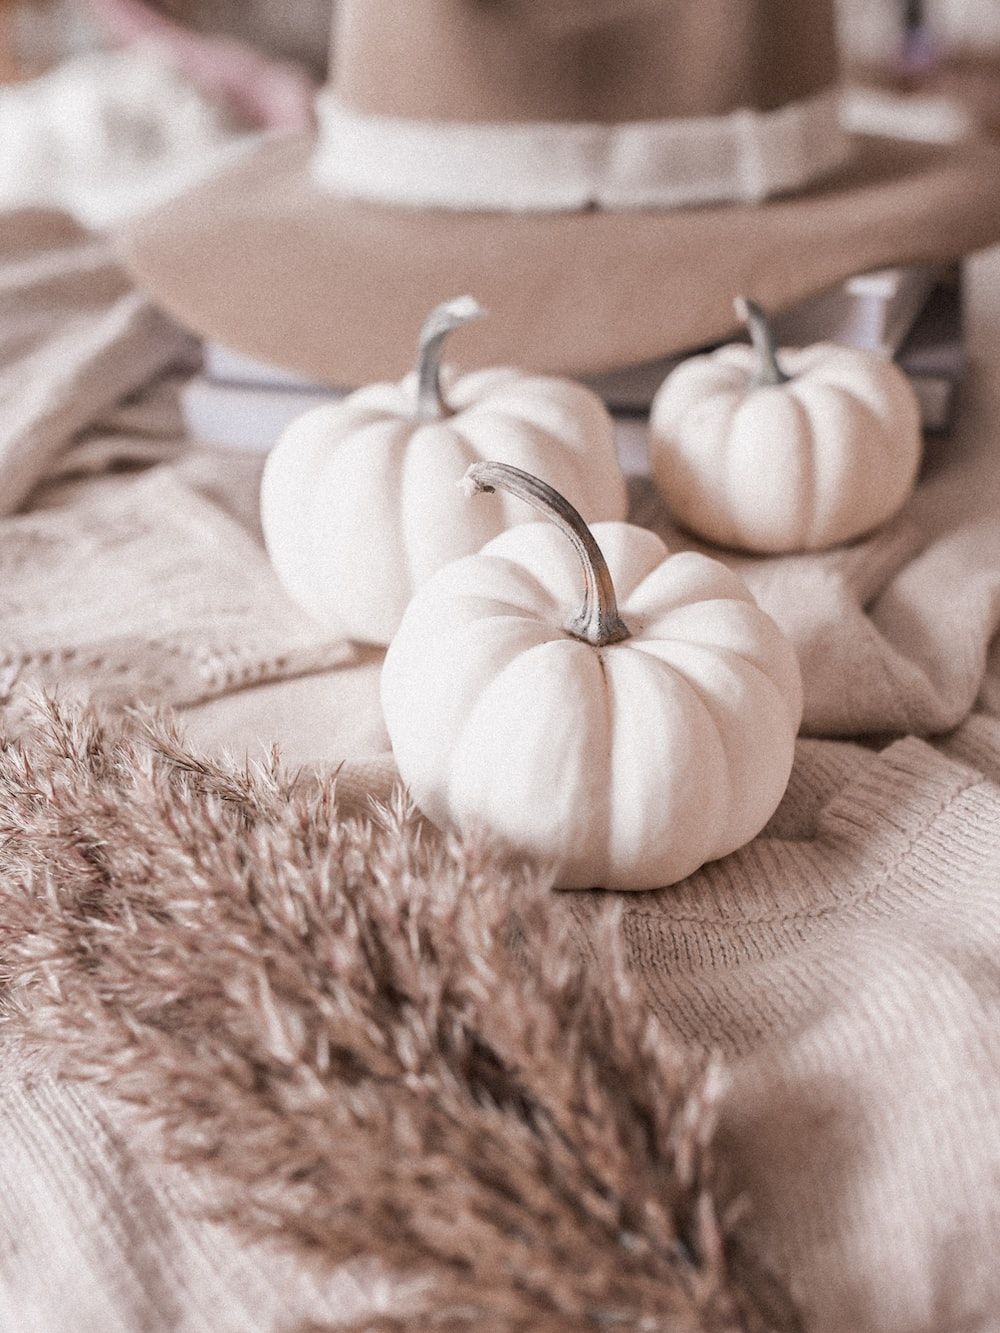 White Pumpkin Picture. Download Free Image